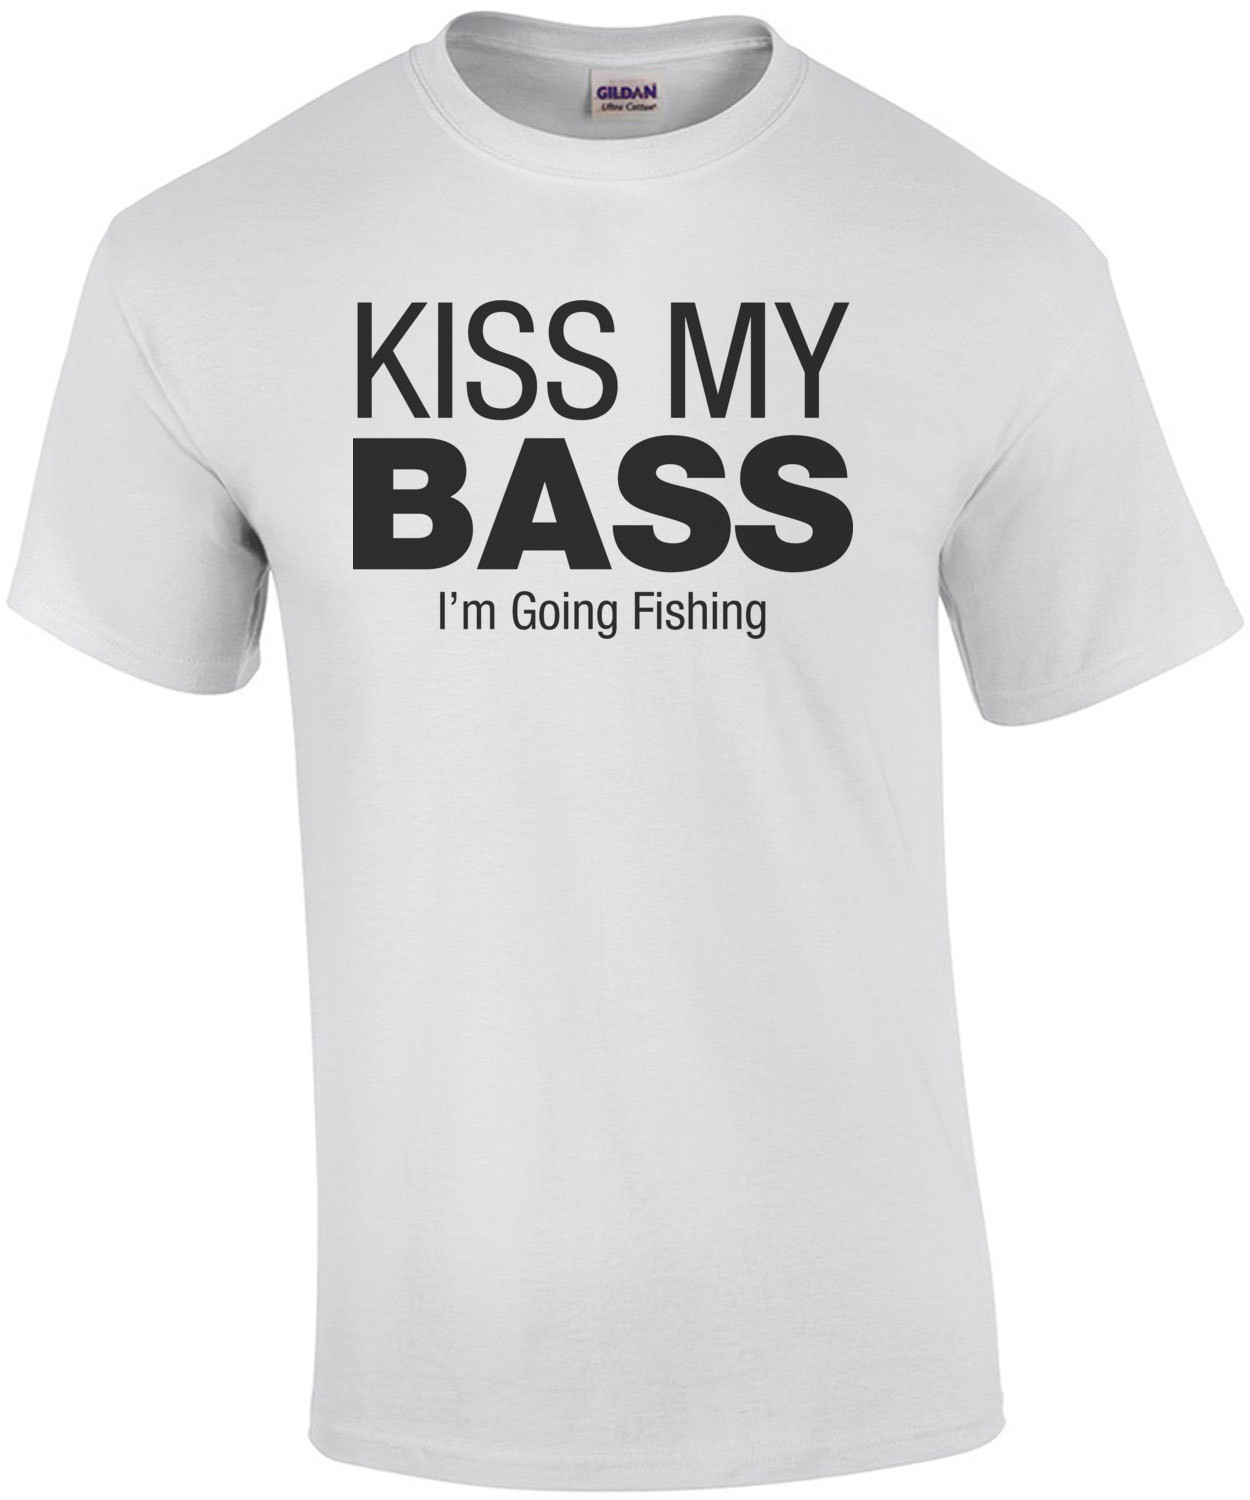 Kiss My Bass, I'm Going Fishing - Fisherman